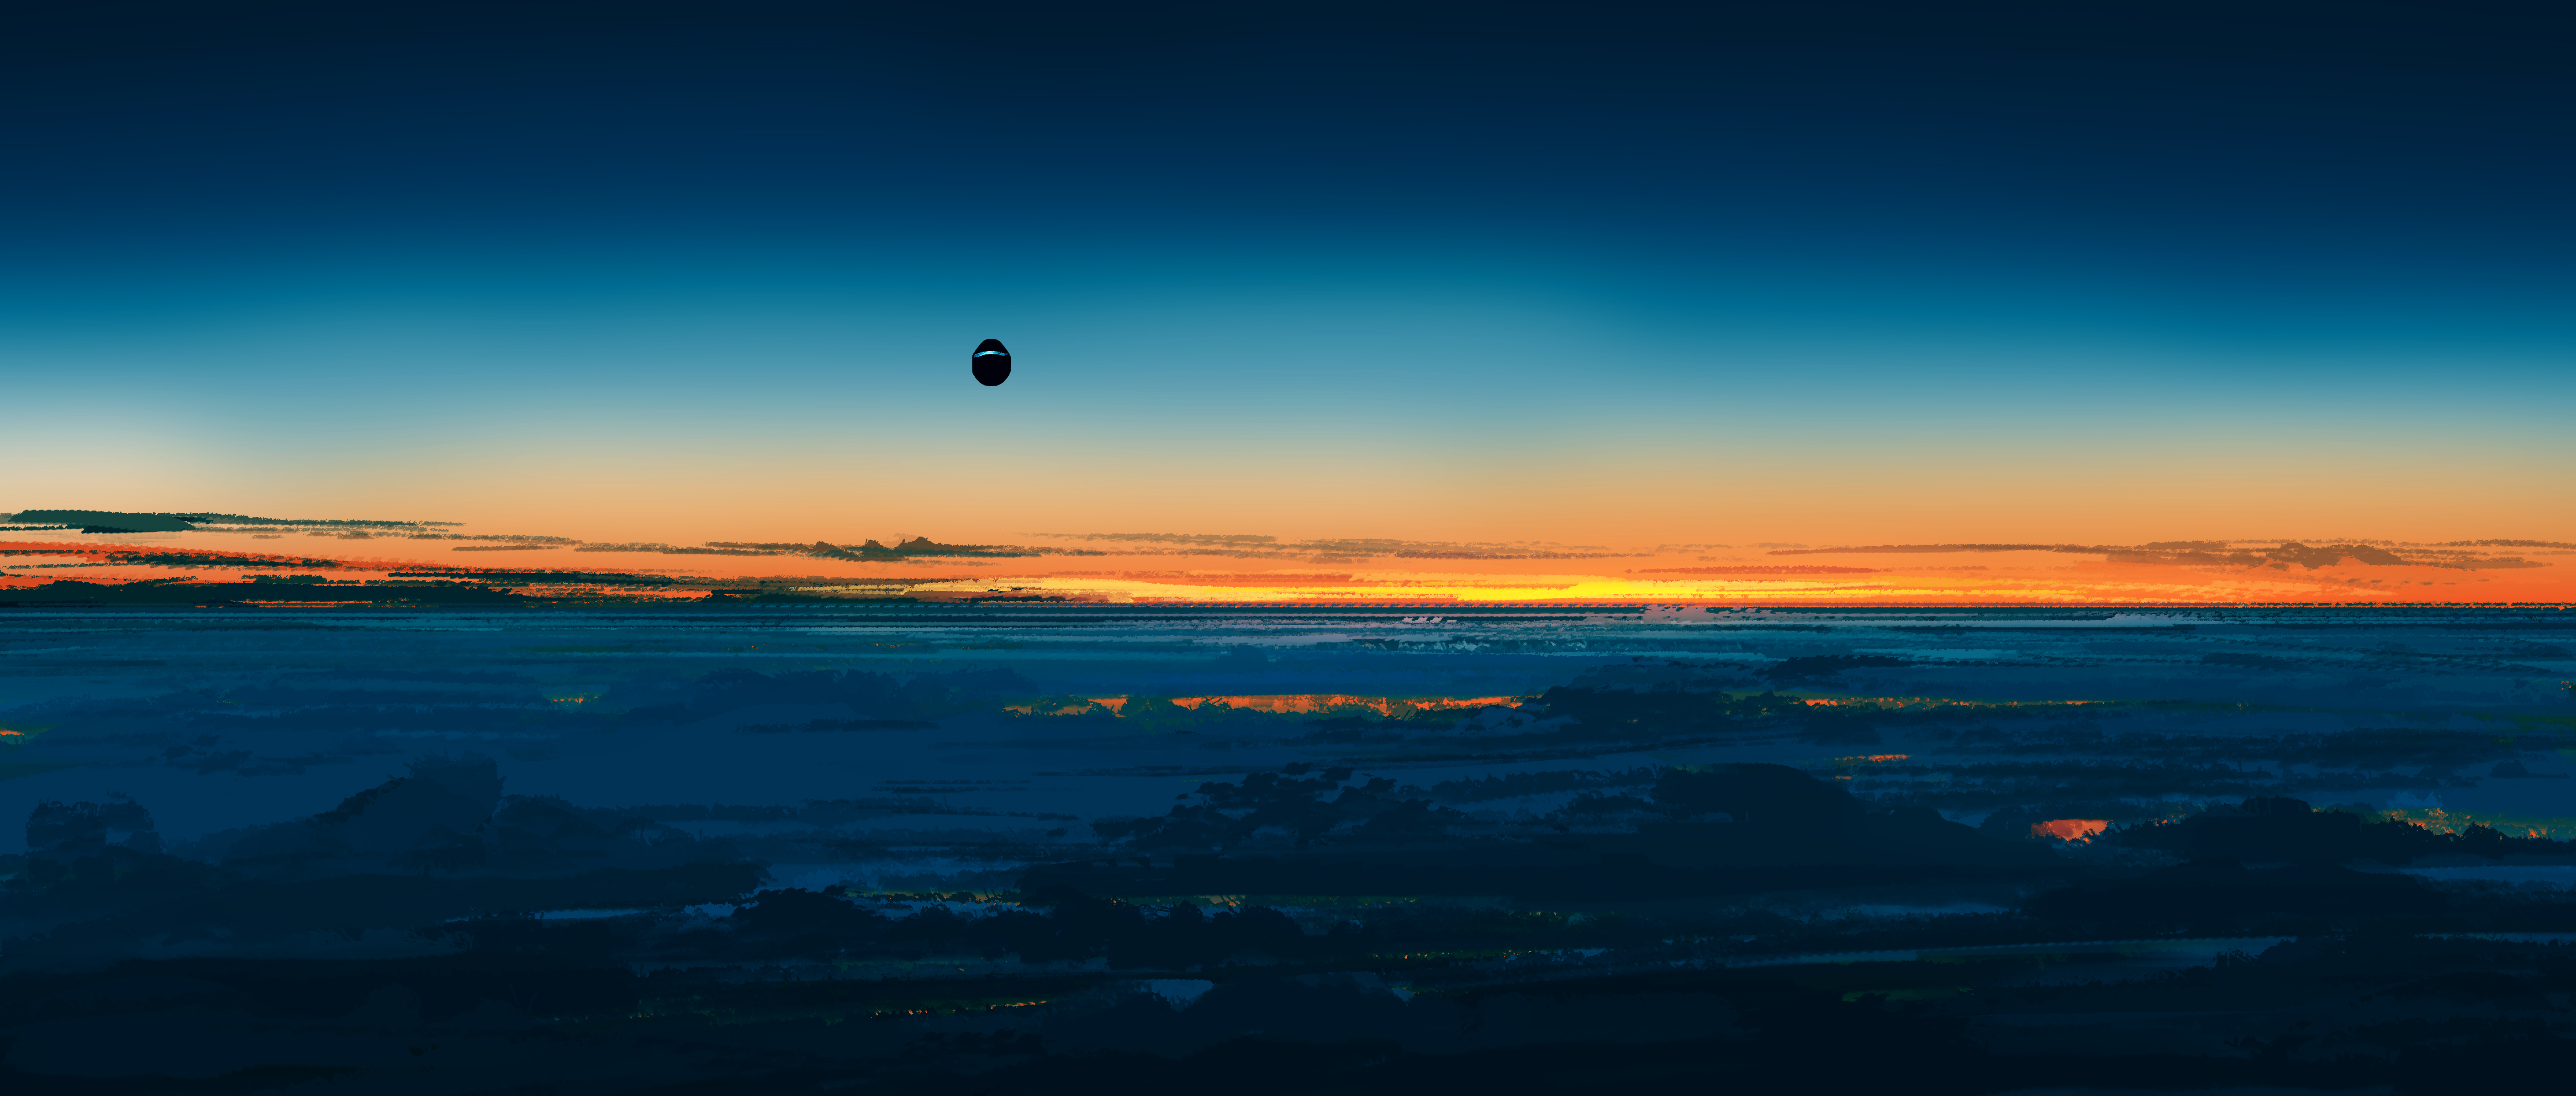 Gracile Digital Art Artwork Illustration Landscape Wide Screen Sky Clouds Sunset Spaceship Ultrawide 5640x2400